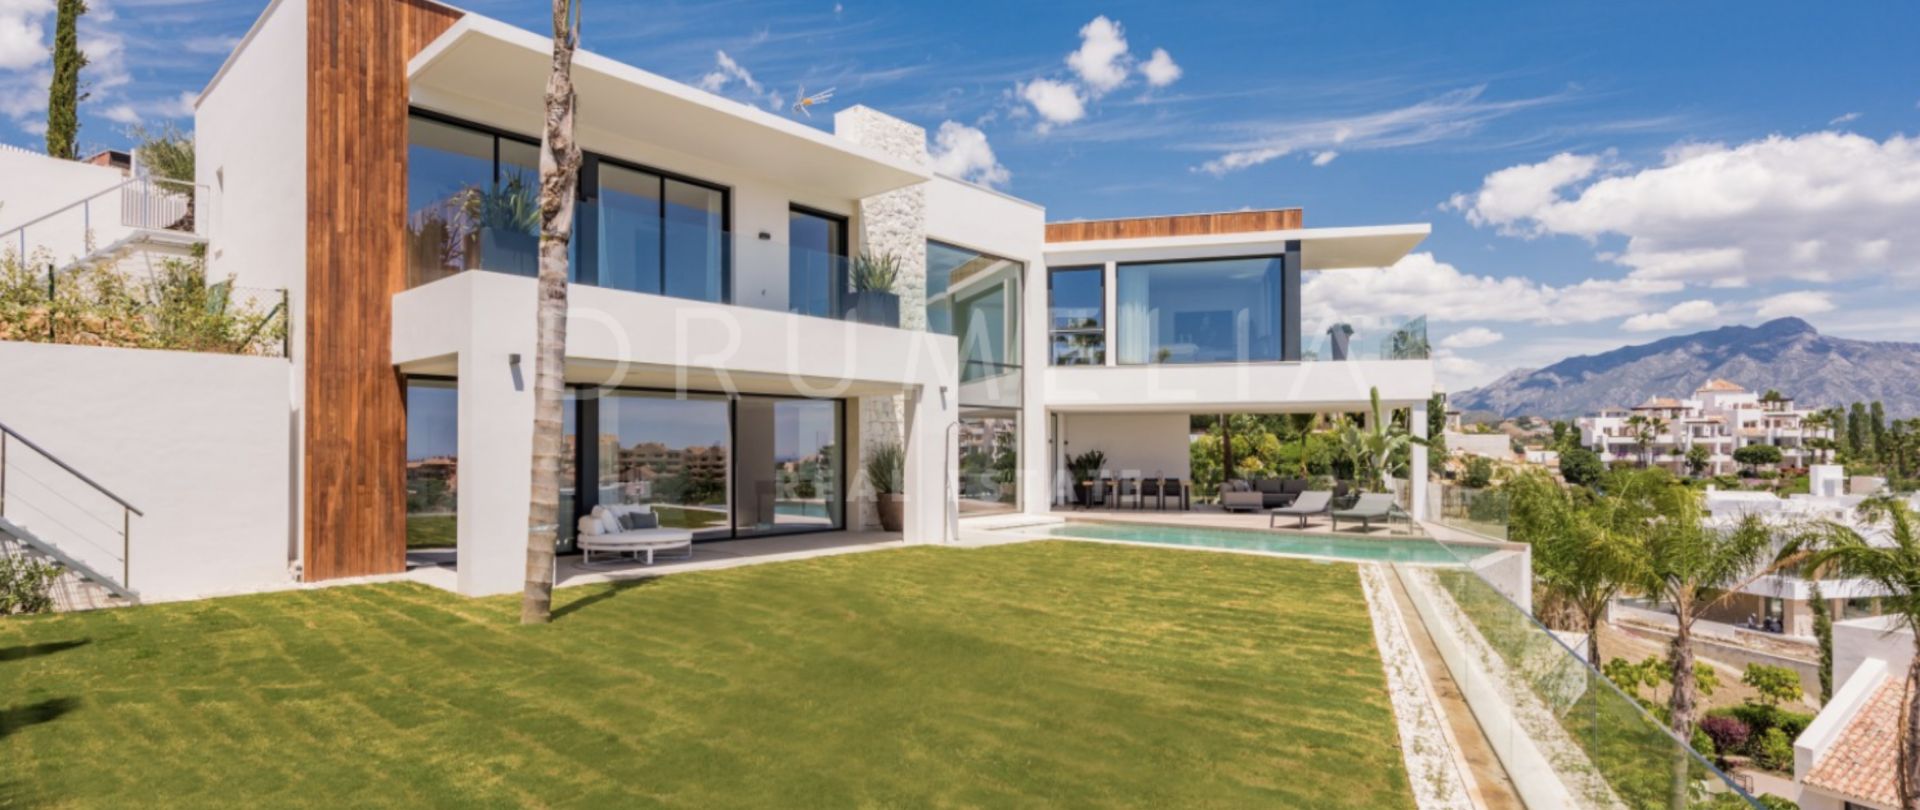 Spectacular contemporary villa with panoramic views in Alqueria, Benahavis